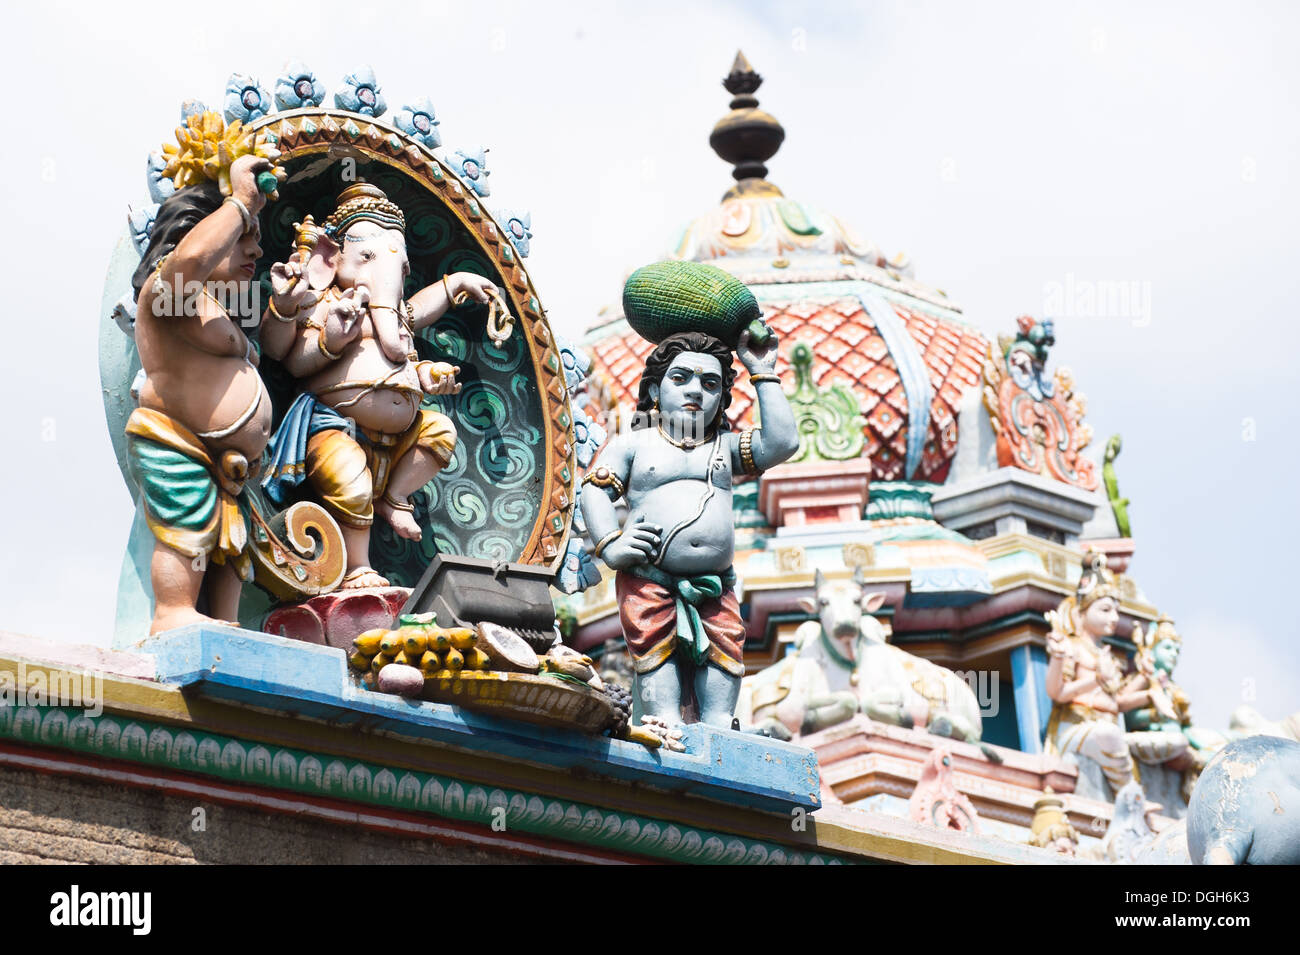 Religiosi indù art. Antica statua pantheon di divinità al Temple gopura (torre) facciata. India del sud, Tamil Nadu Foto Stock